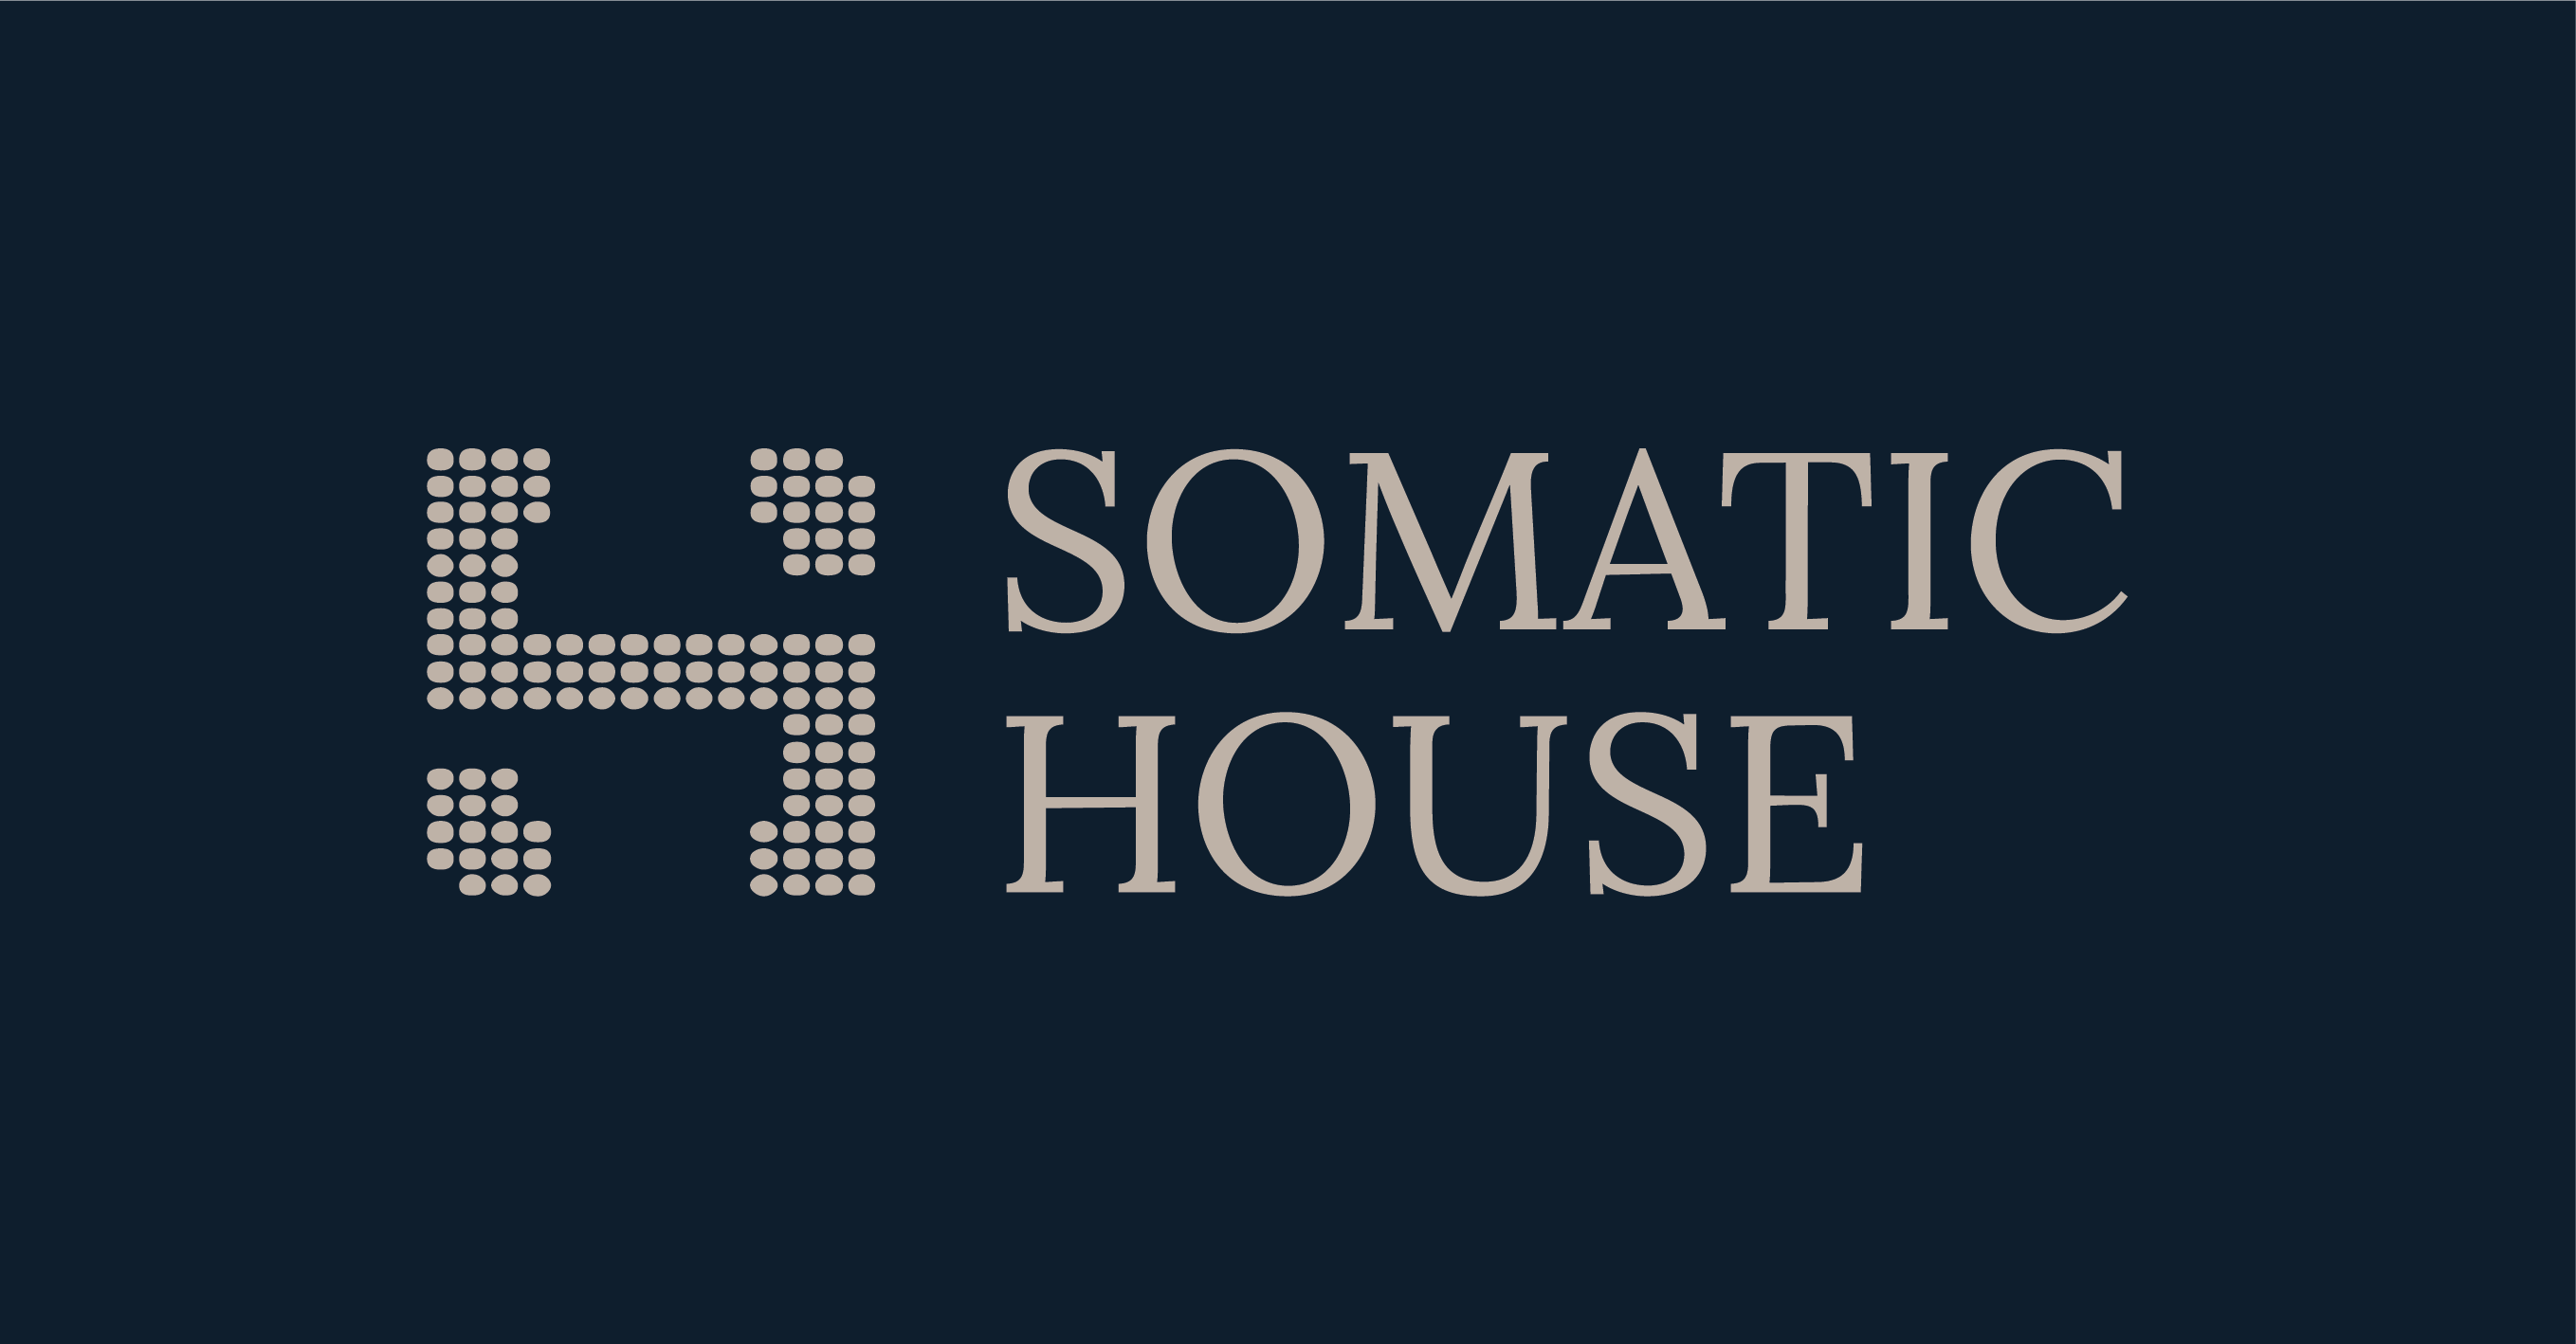 SOMATIC HOUSE